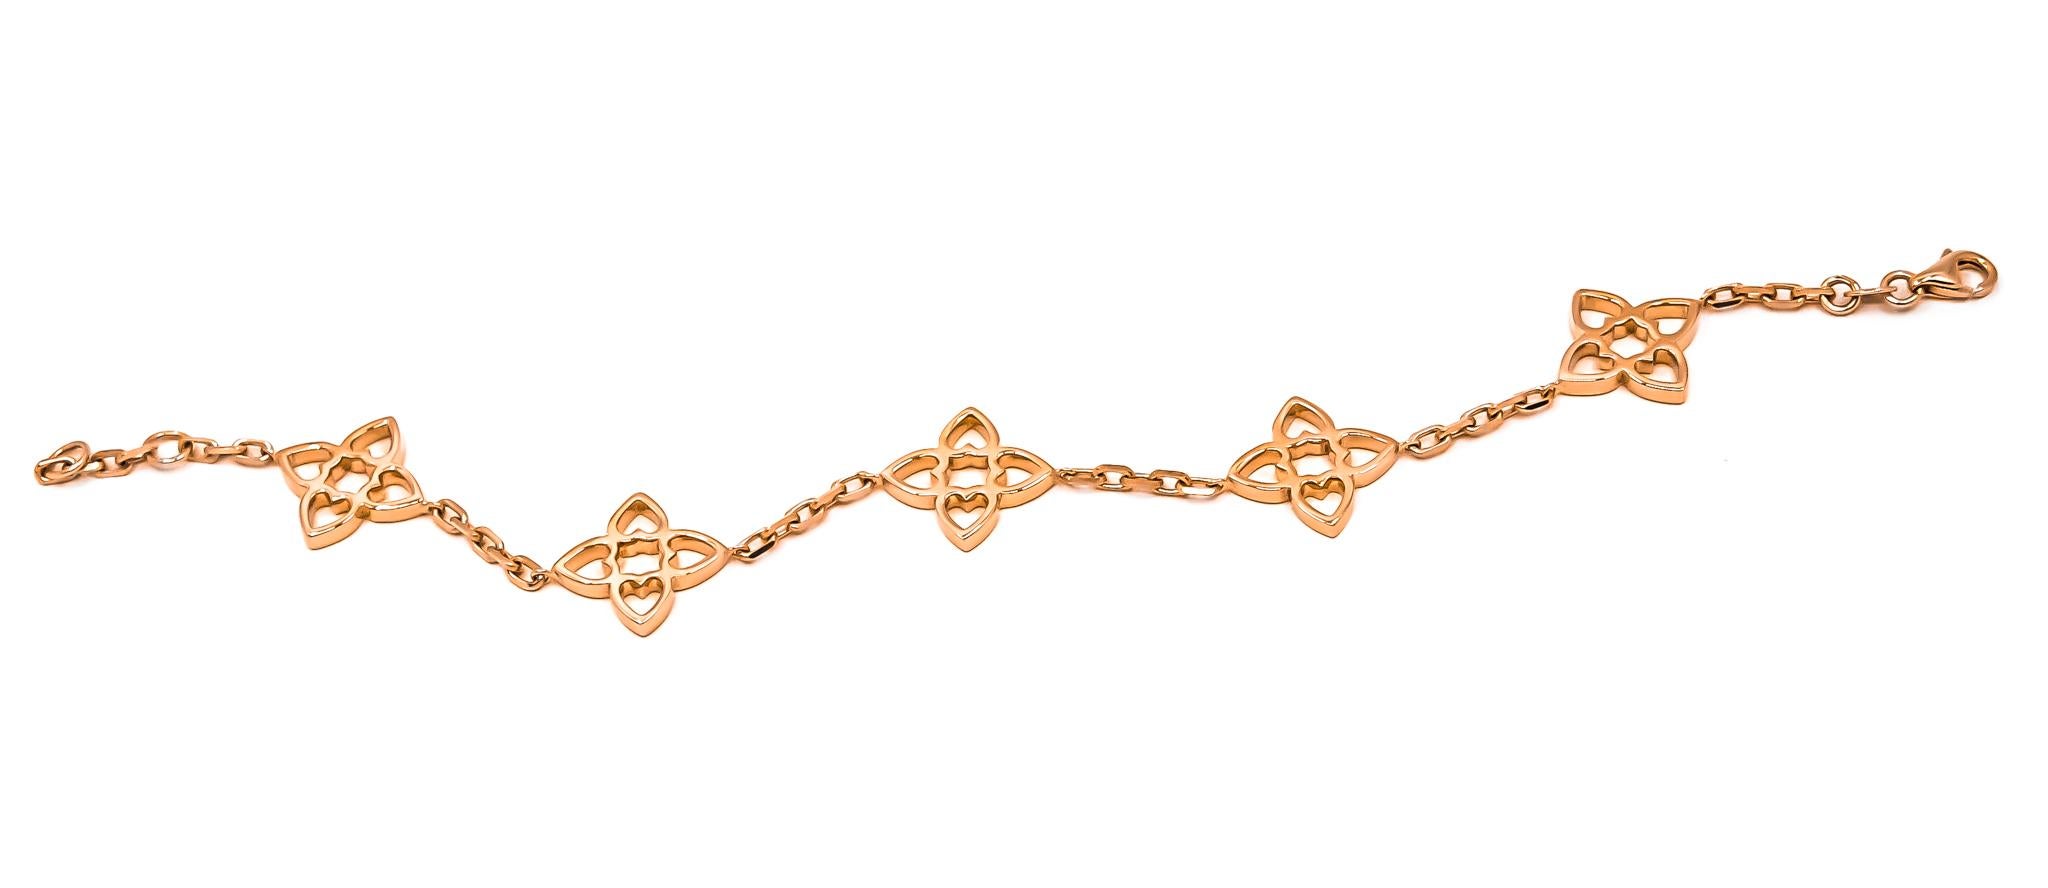 Romantic Connected Hearts Five Motif Bracelet in 18kt Rose Gold For Sale